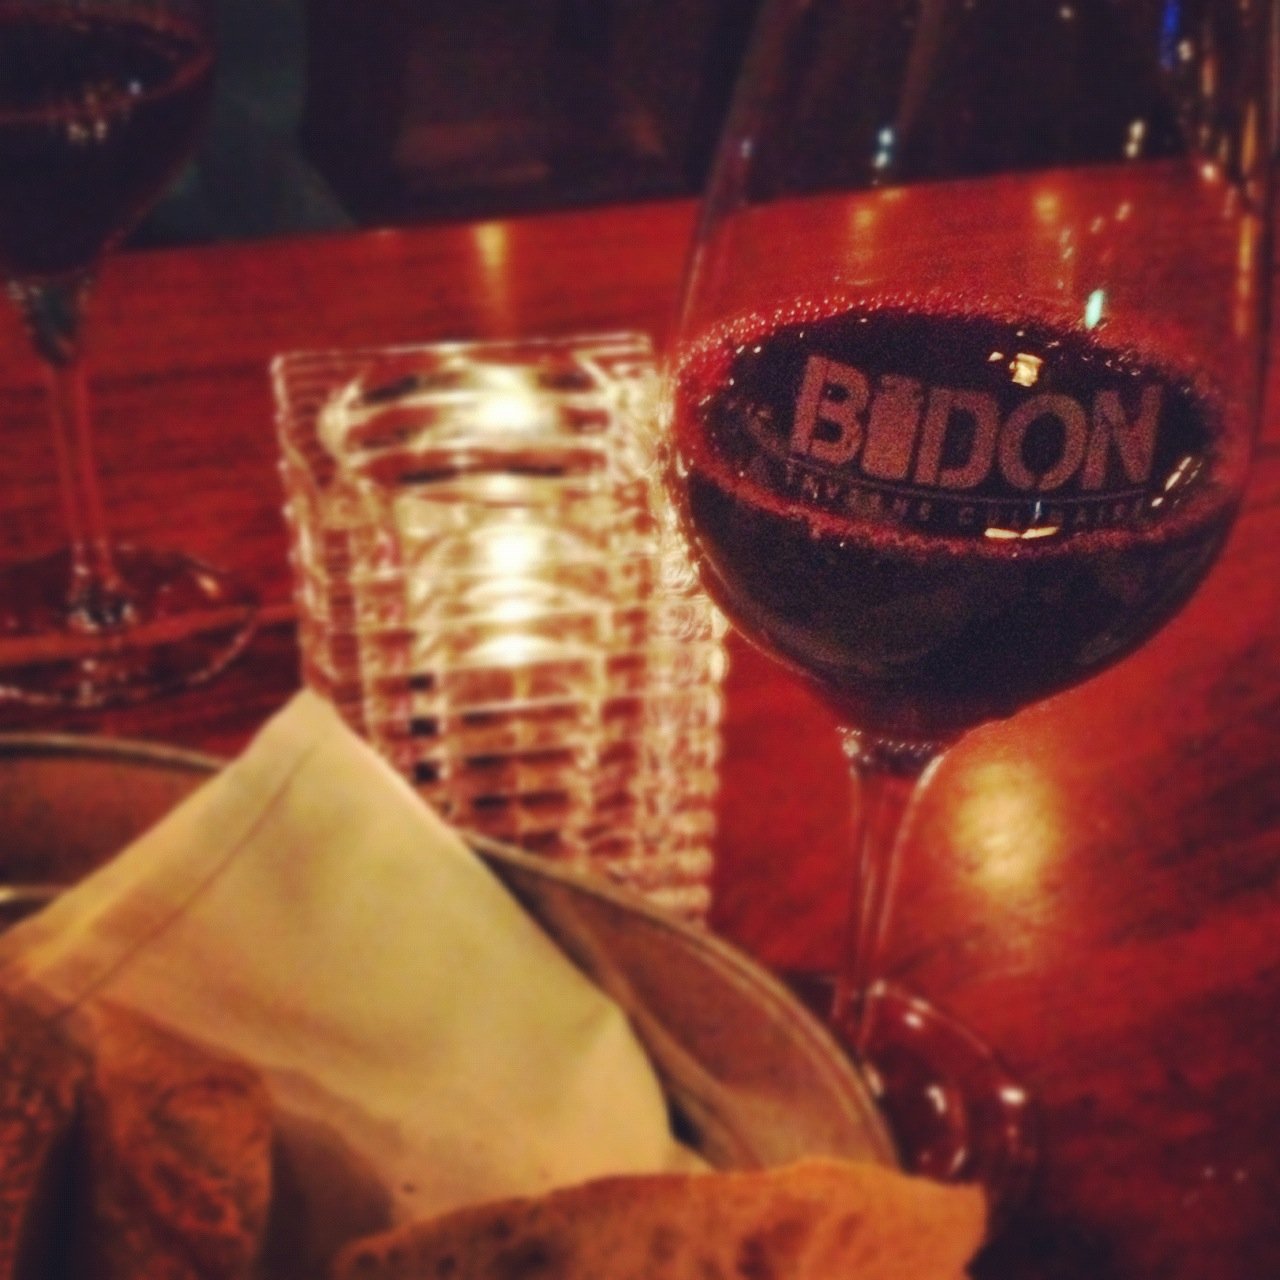 Restaurant Bidon